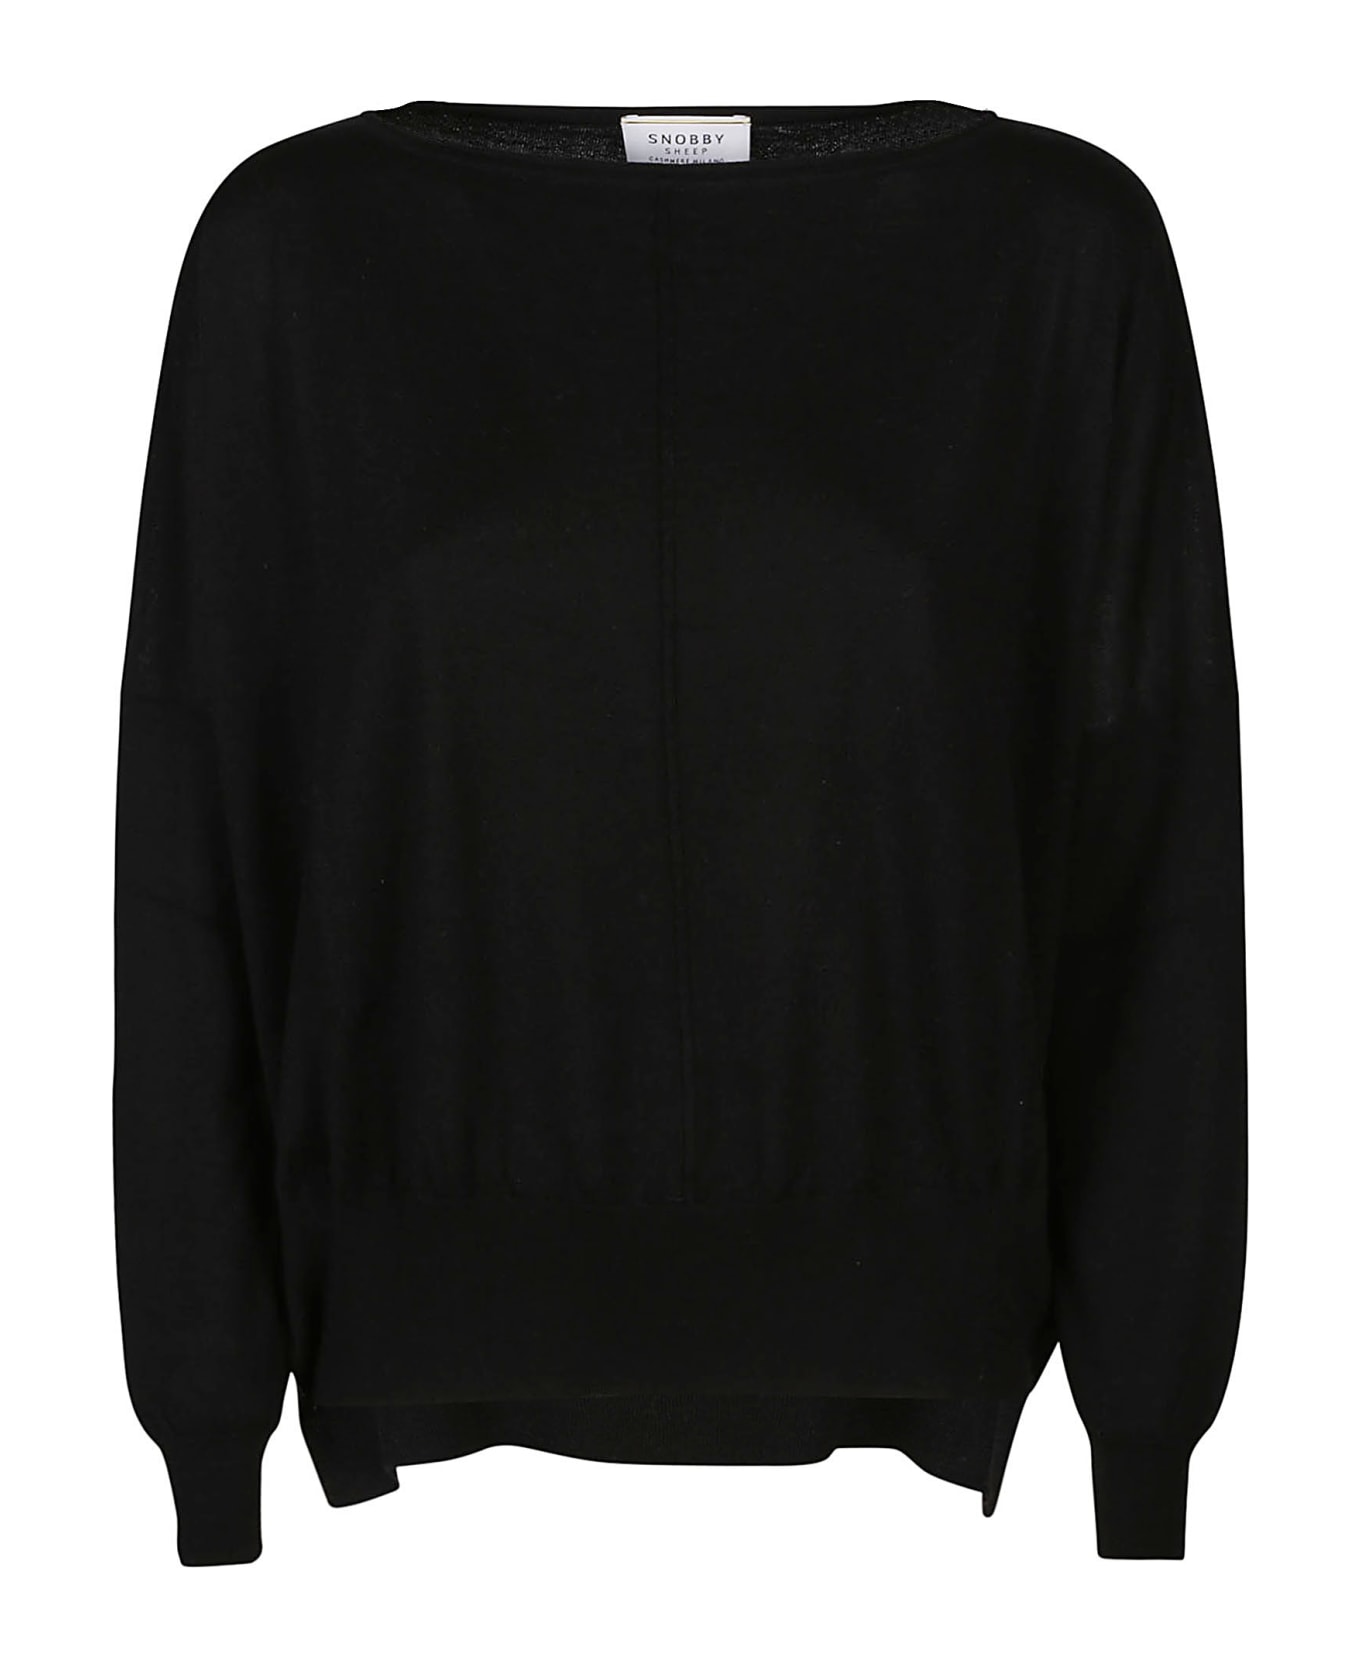 Snobby Sheep Sweater - Black